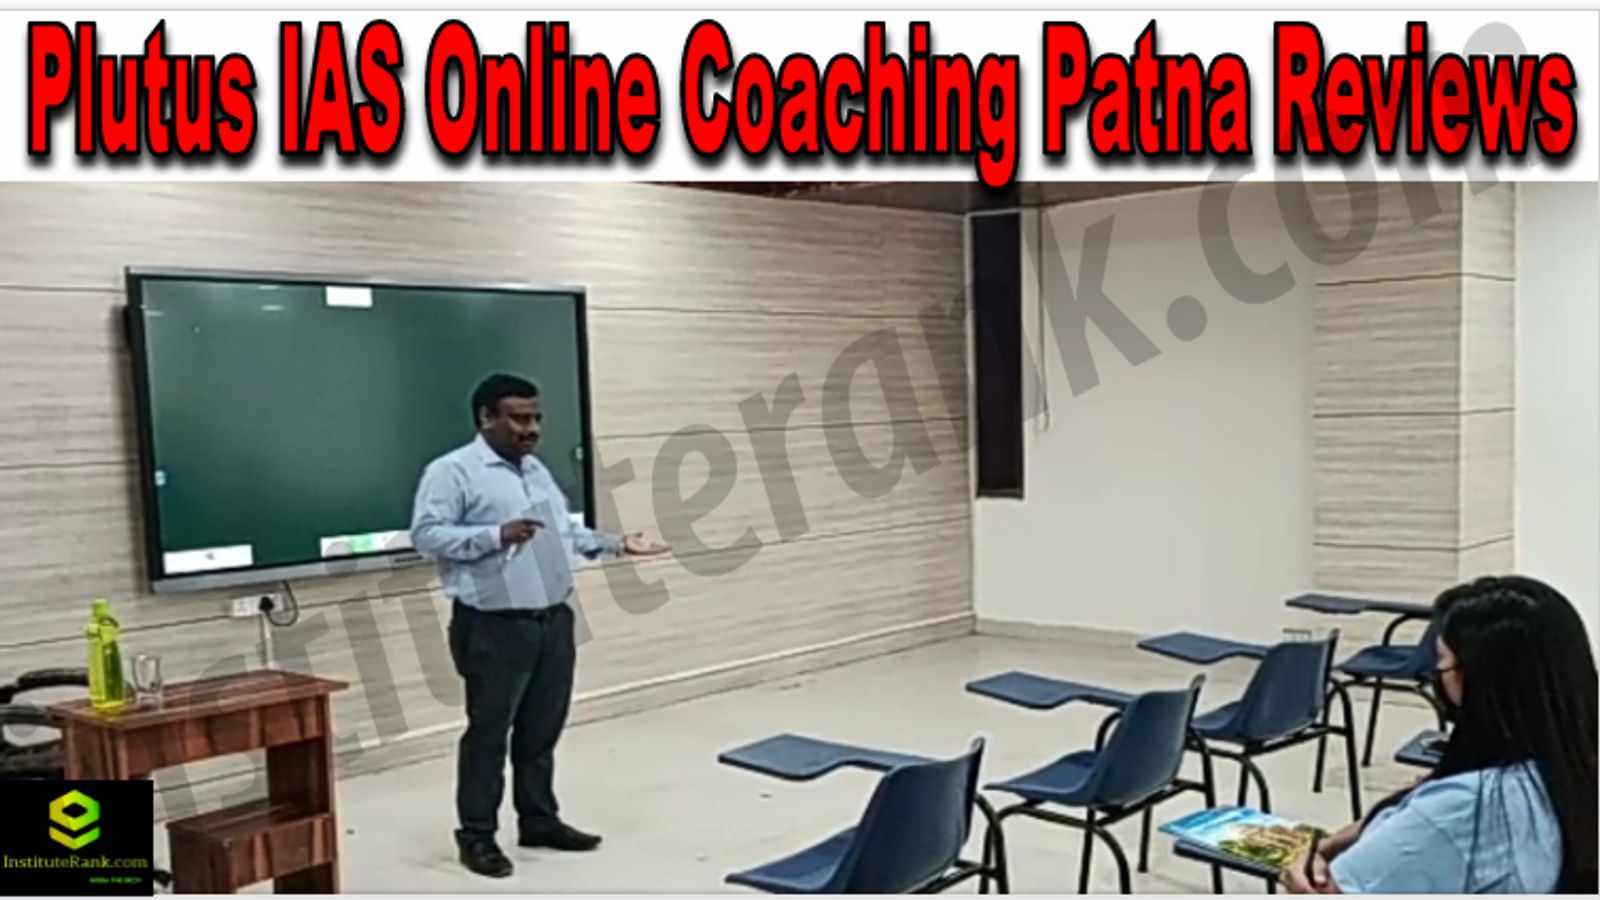 Plutus IAS Online Coaching Patna Reviews